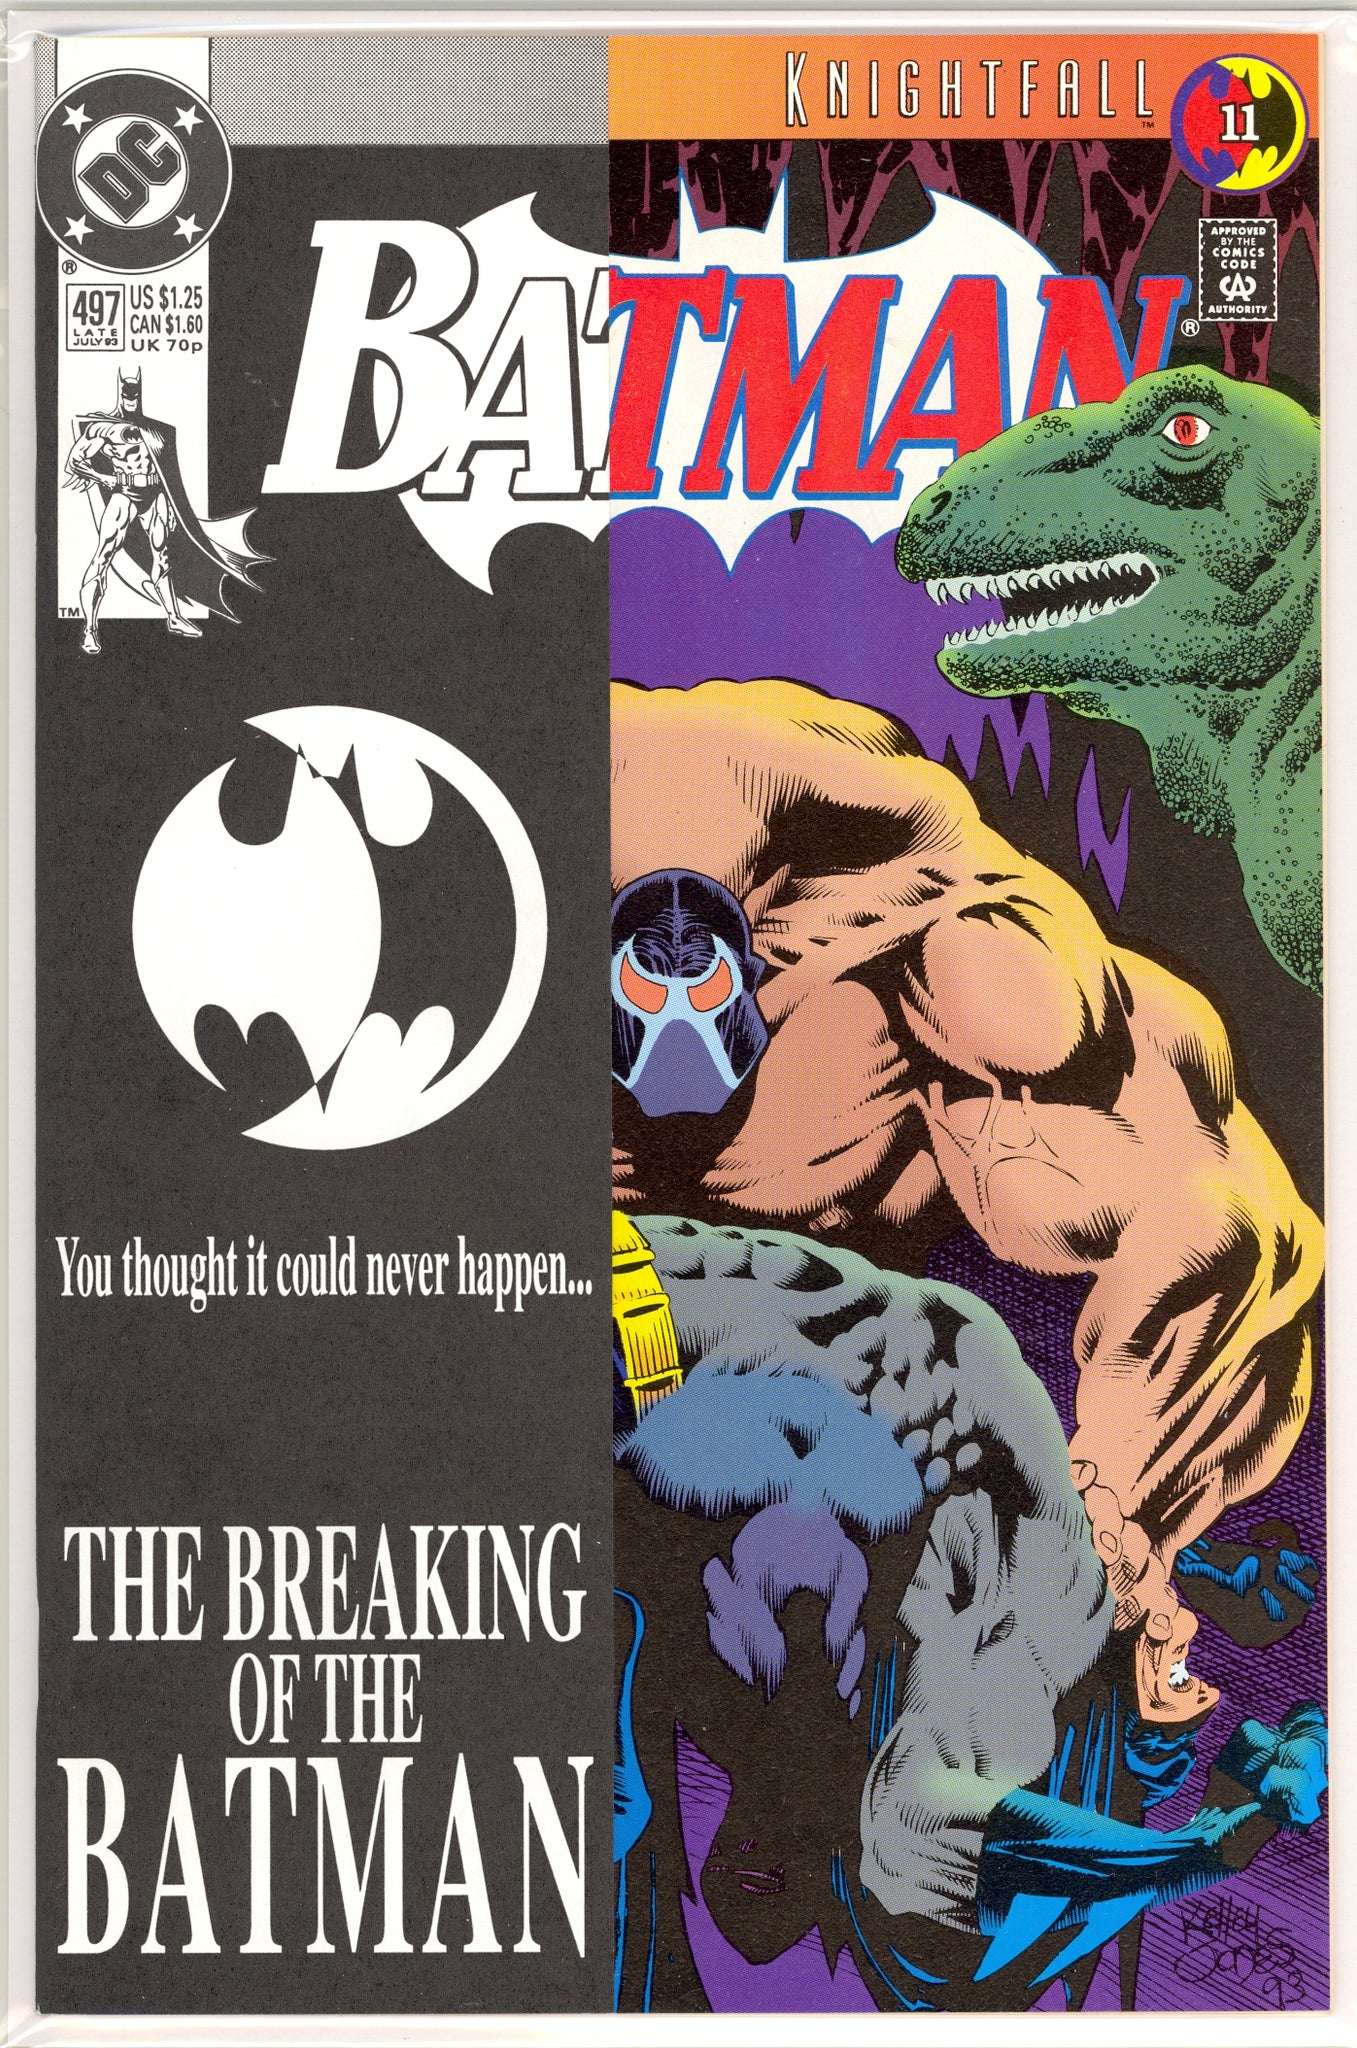 Batman #497 (1993) Knightfall part 11